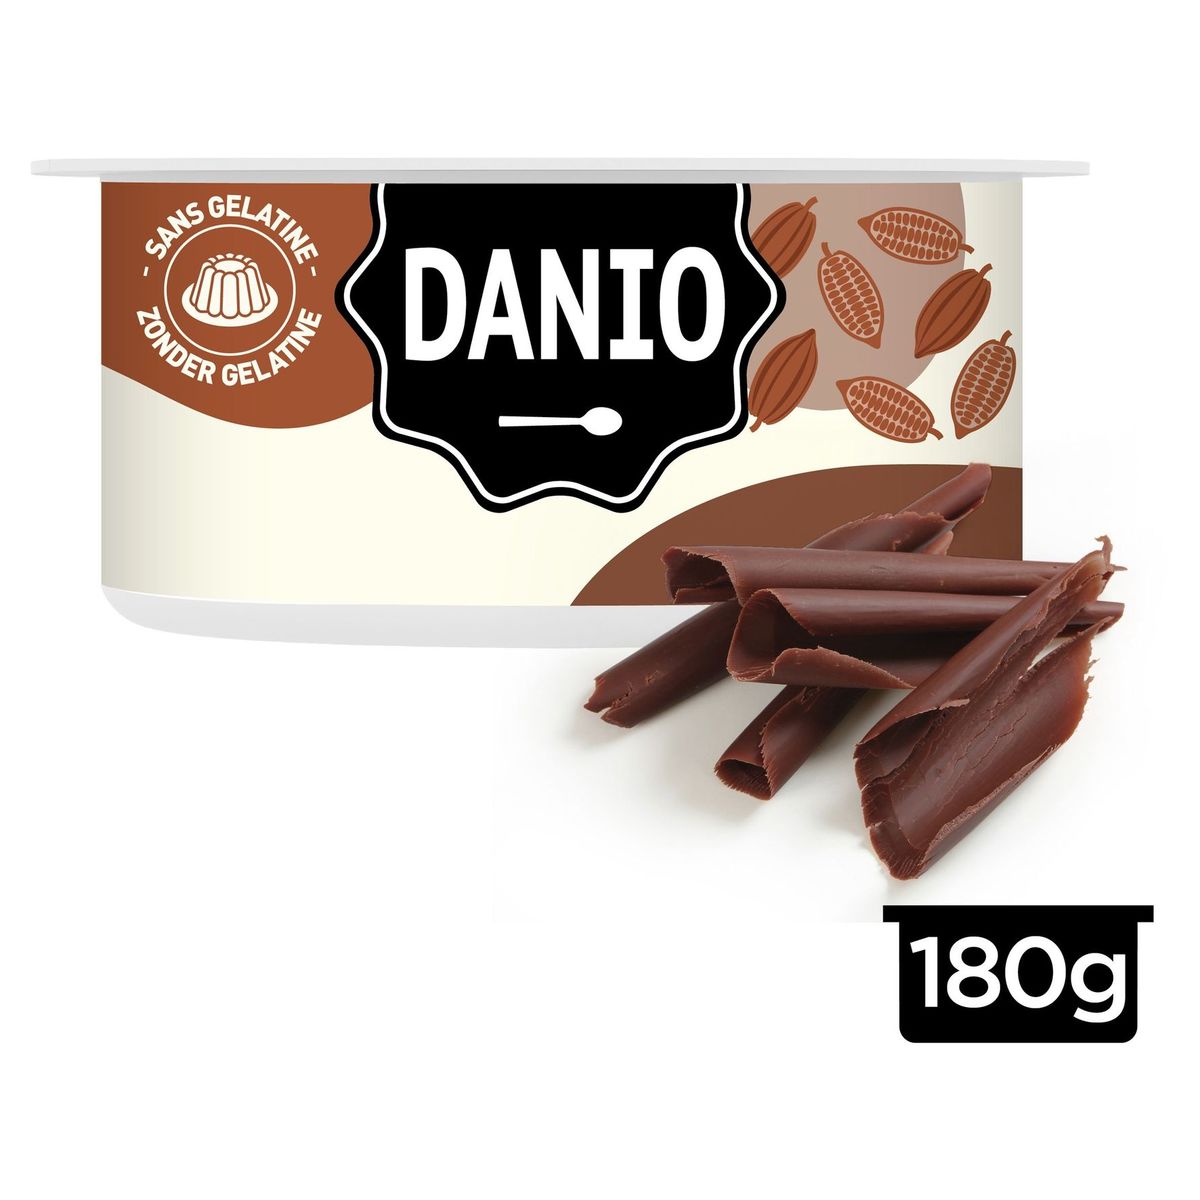 Danio Specialiteit met Verse Kaas Stracciatella Snack 180 g